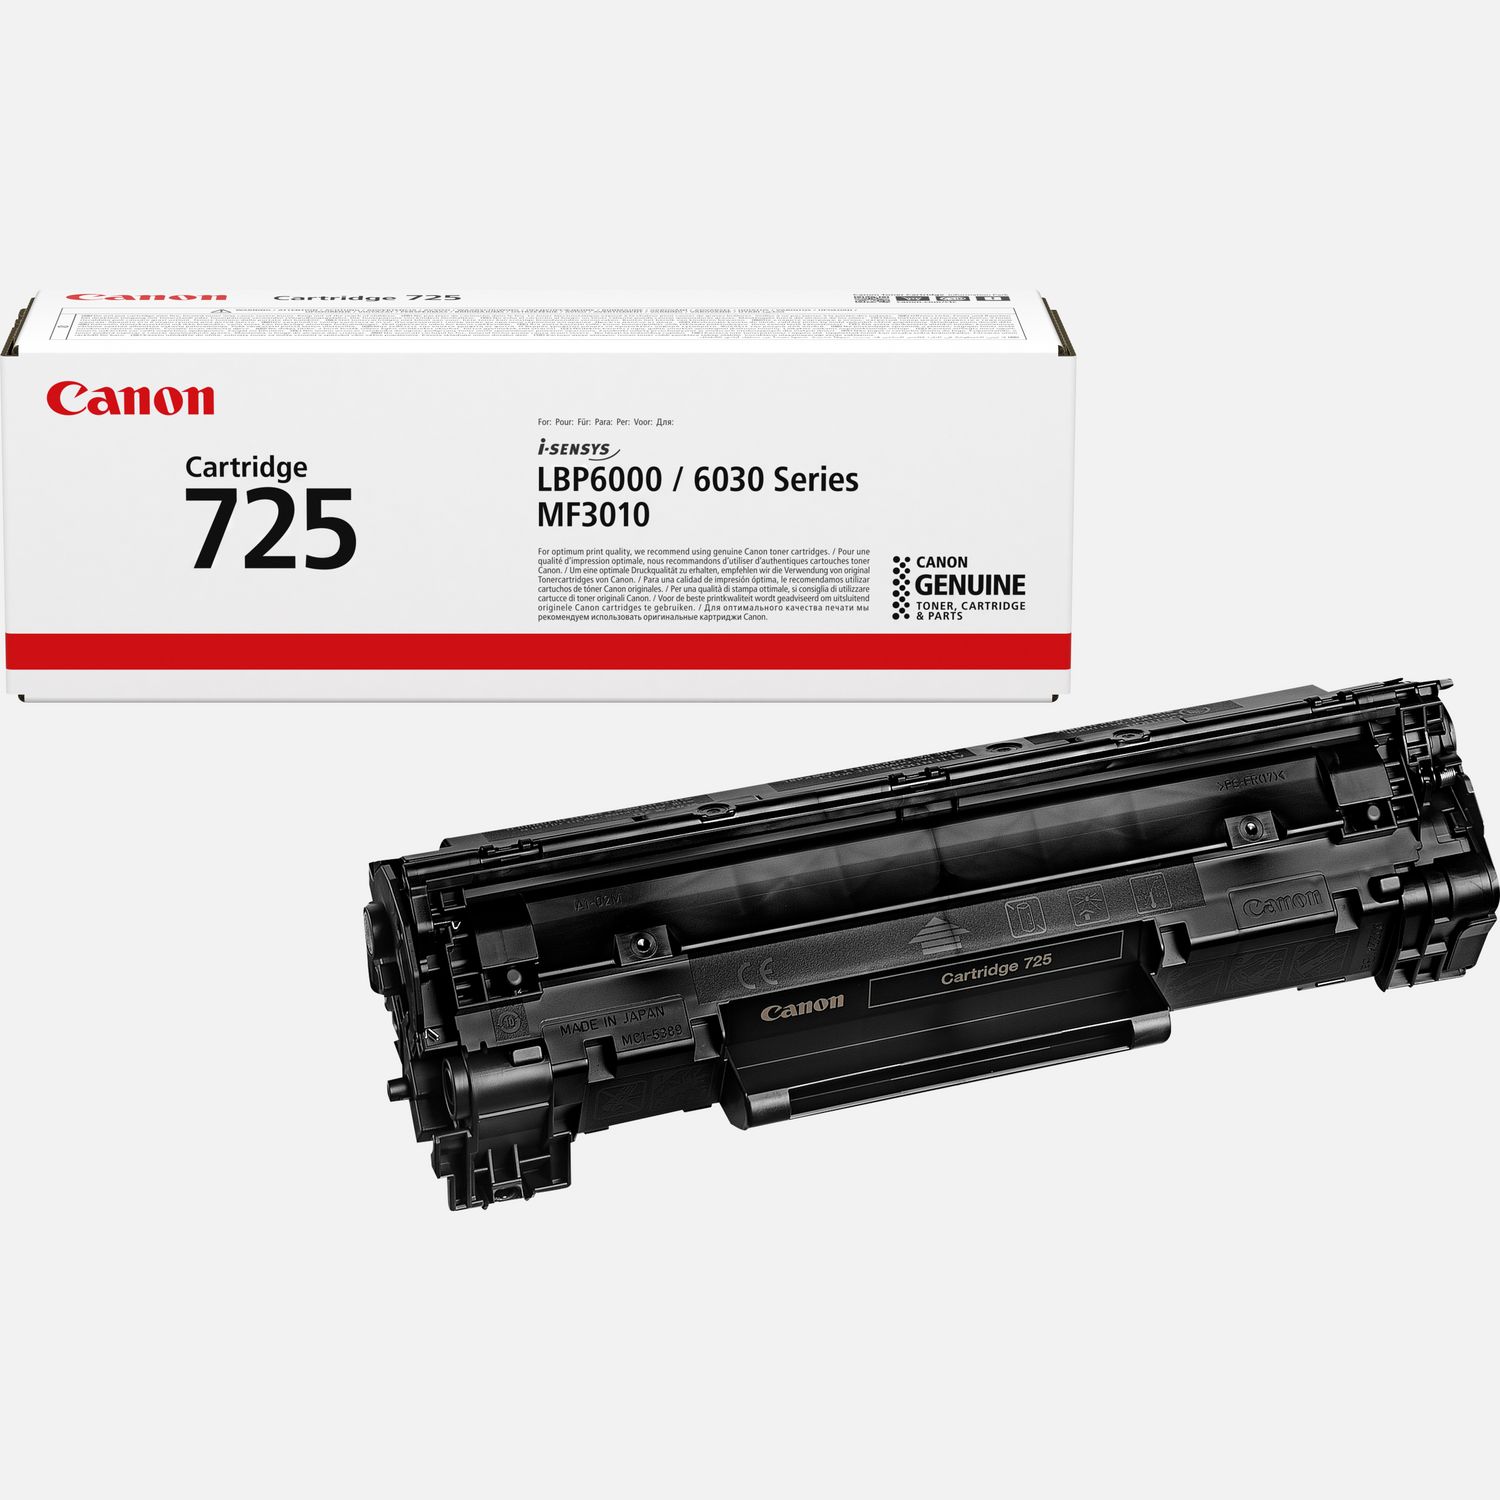 Картридж Canon 725, LBP6000/6030, MF3010 (3484B002), Original